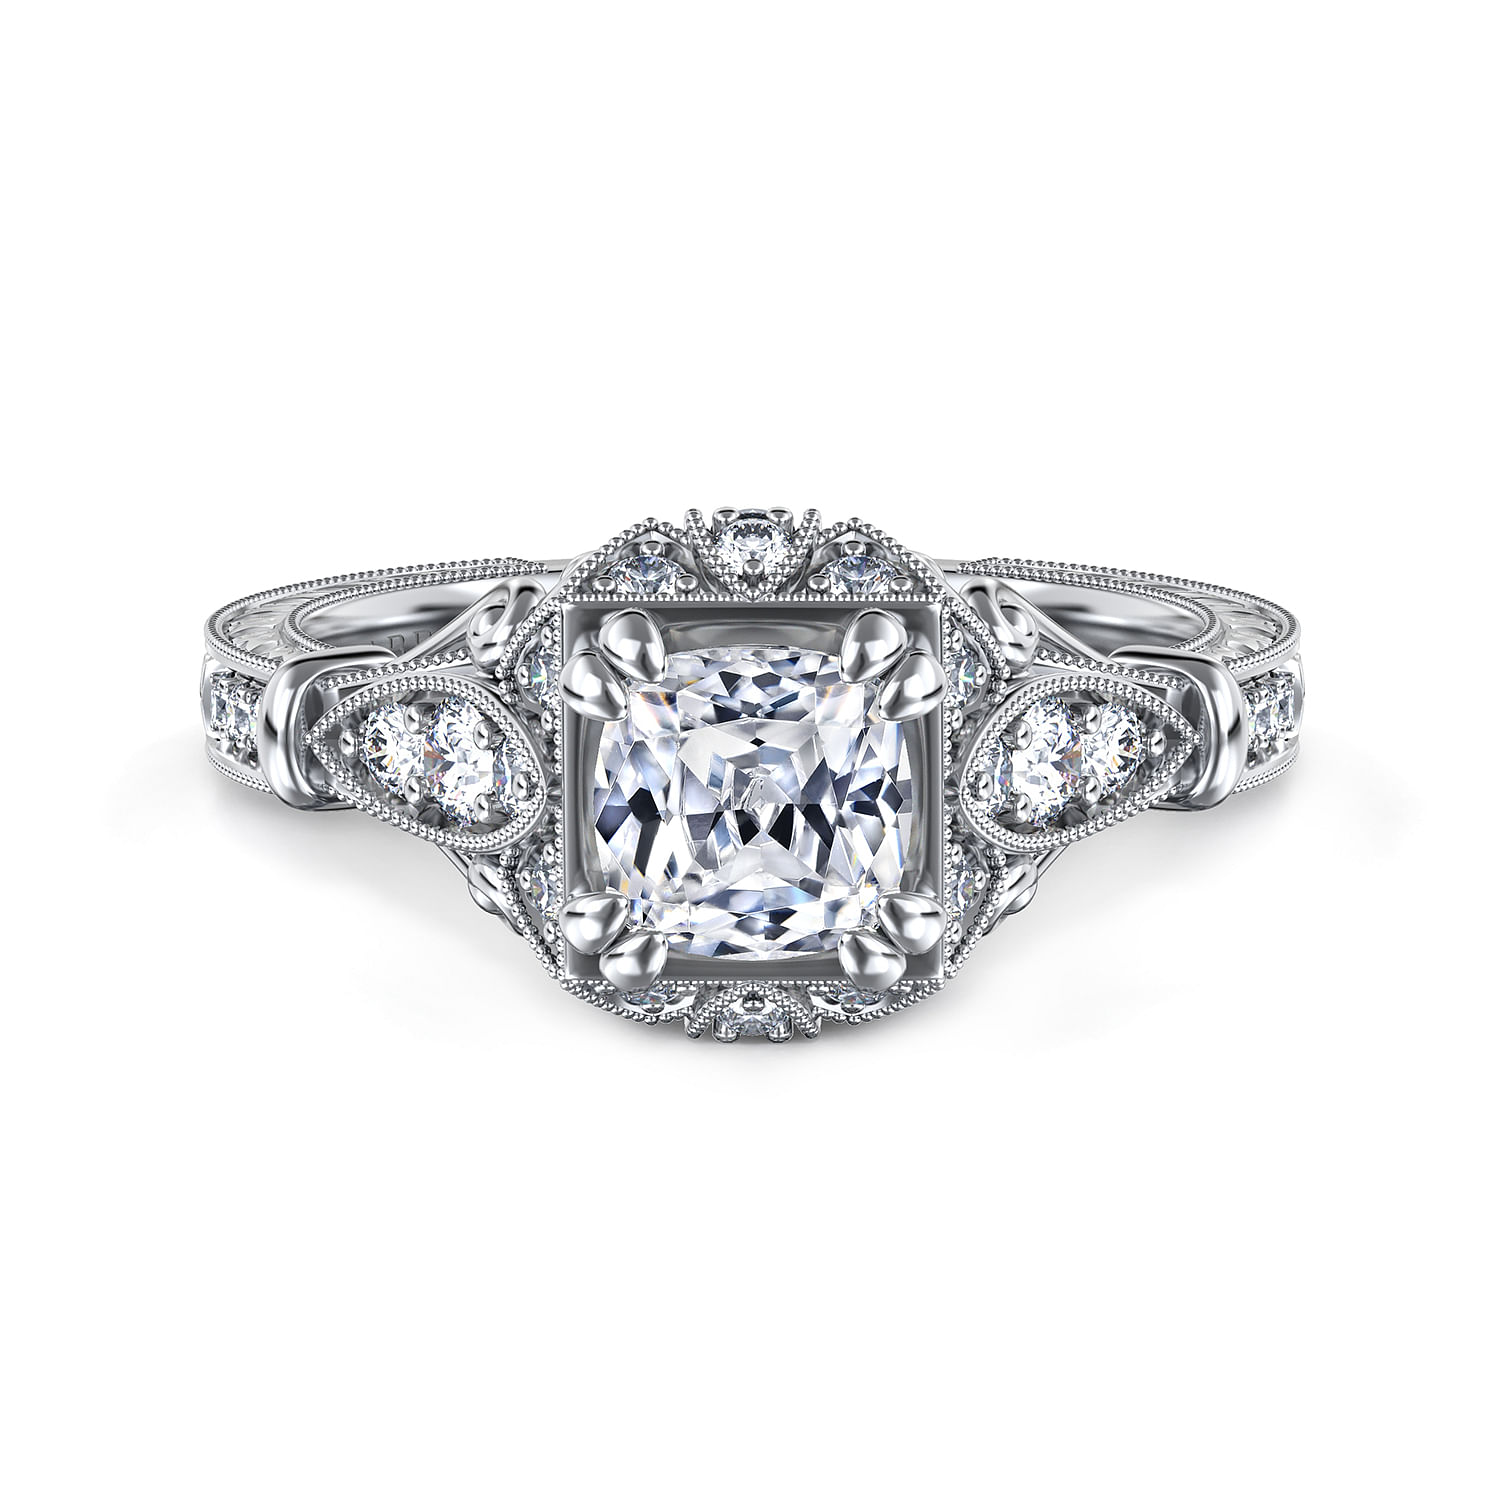 Montgomery - Unique 14K White Gold Vintage Inspired Cushion Cut Halo Diamond Engagement Ring